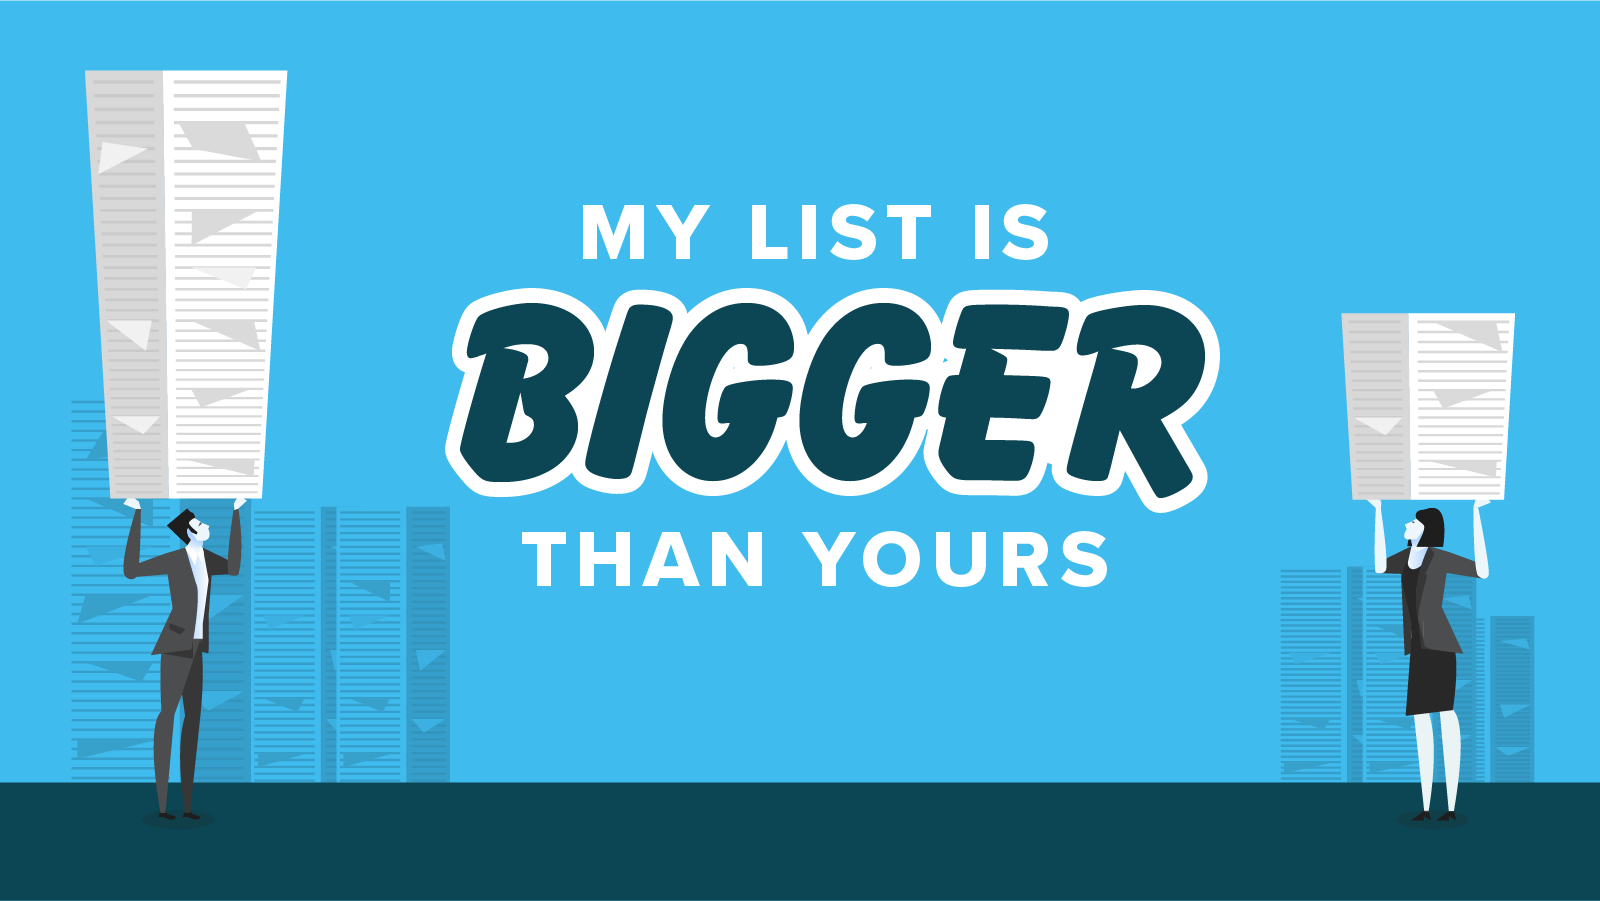 My list is bigger